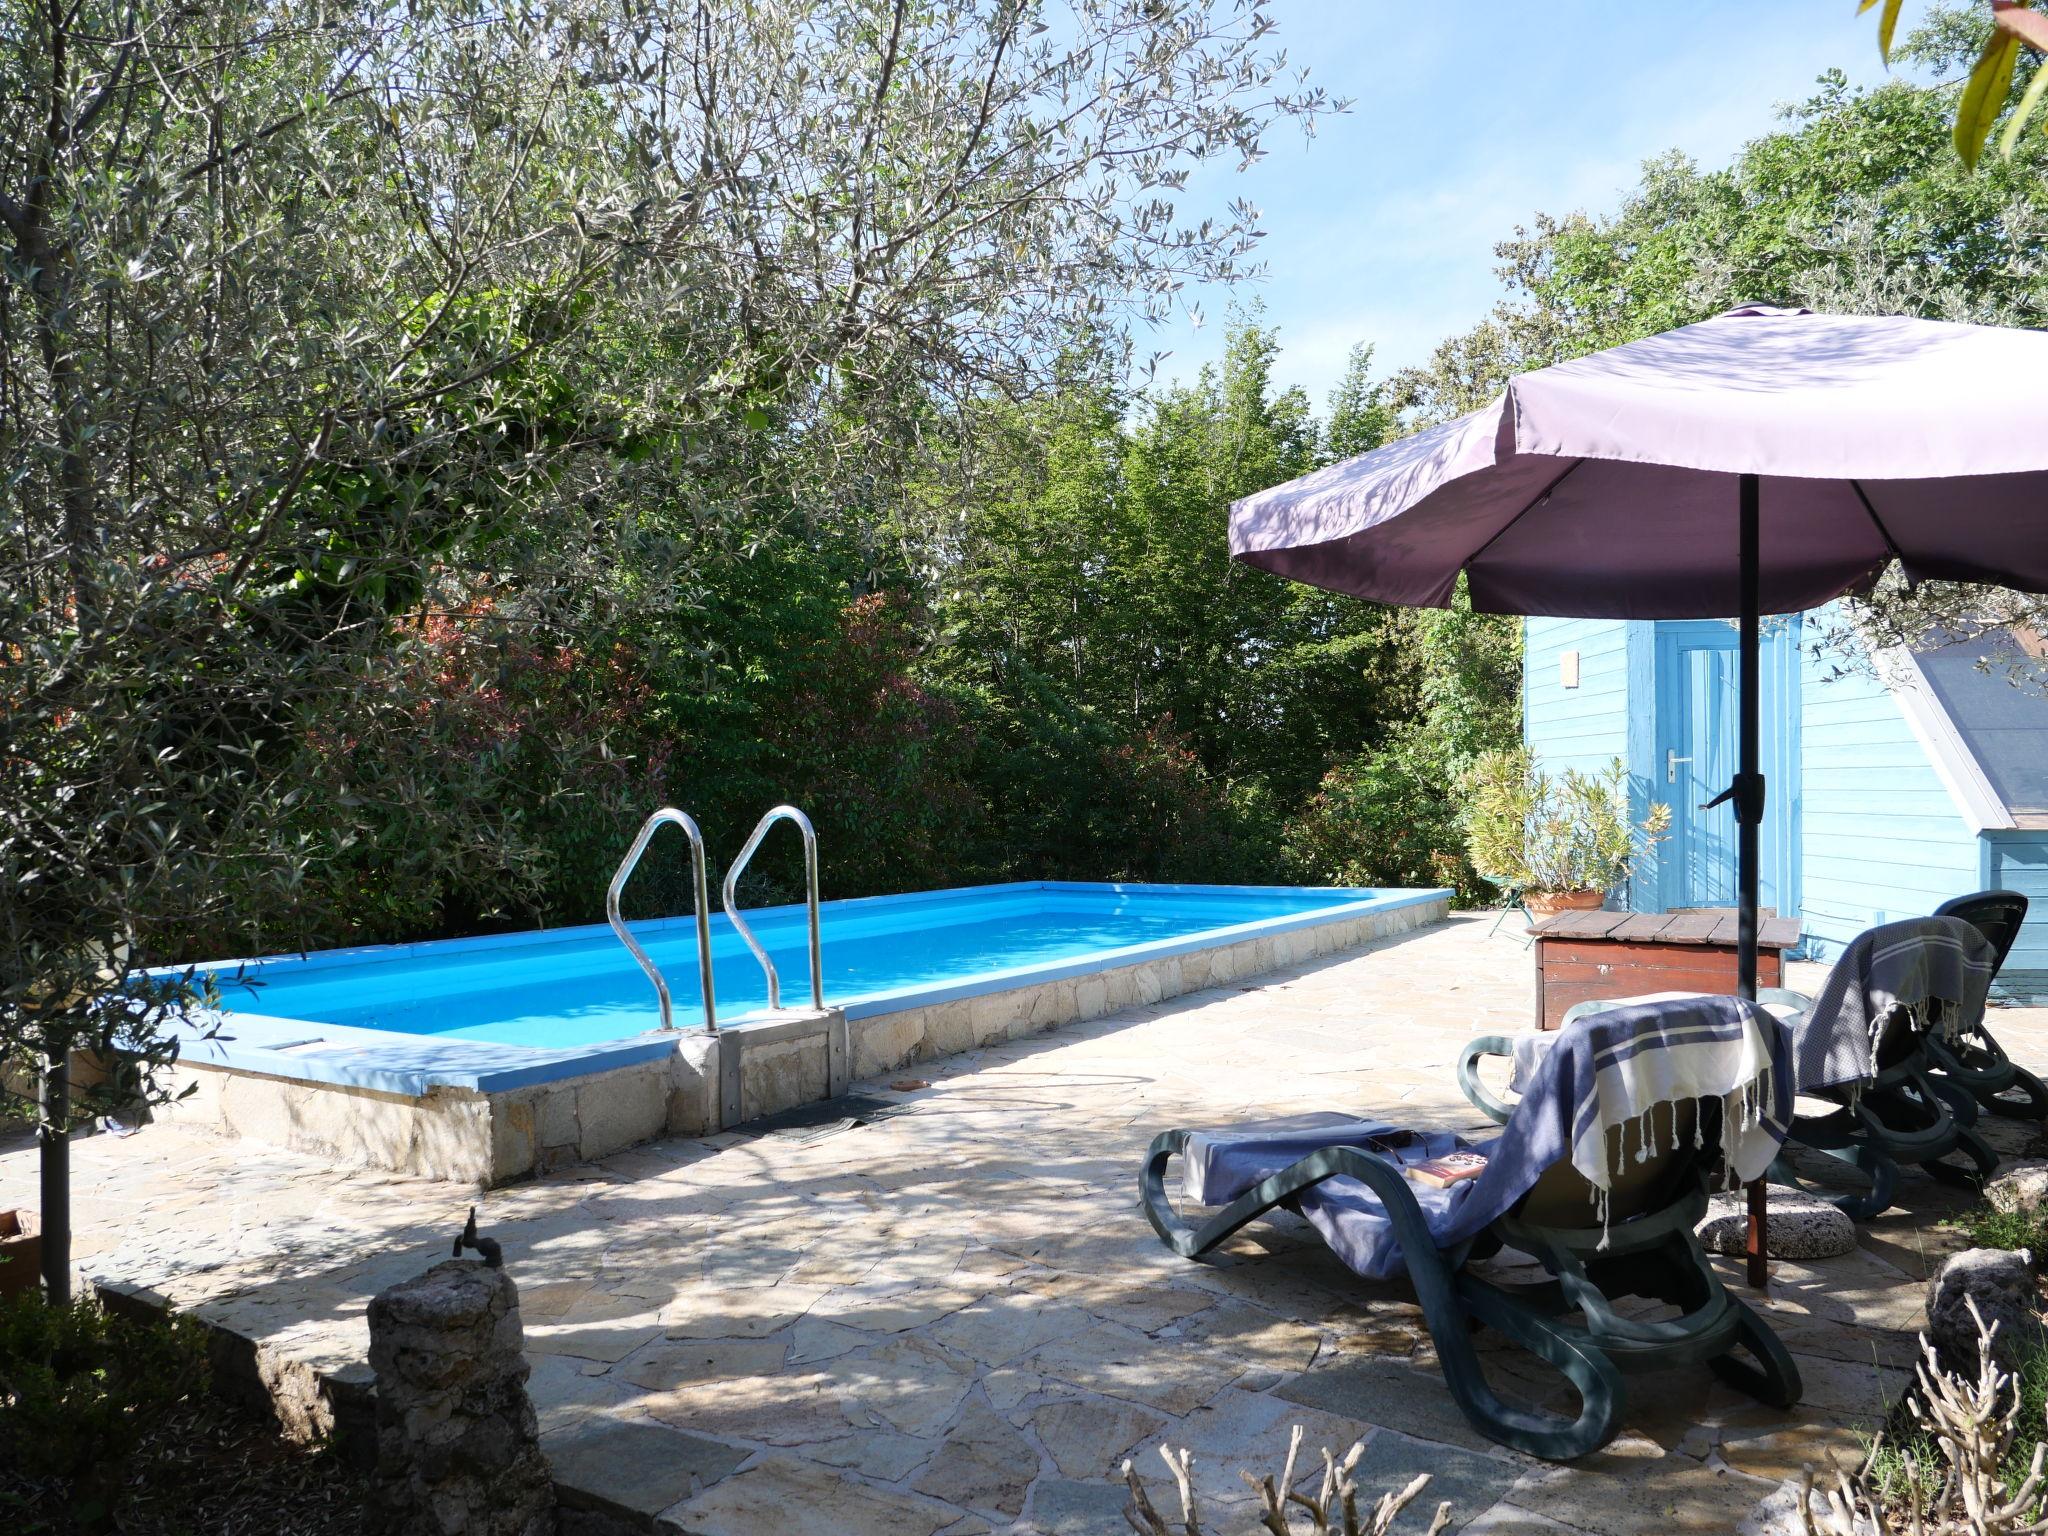 Foto 18 - Casa con 1 camera da letto a Montieri con piscina e giardino